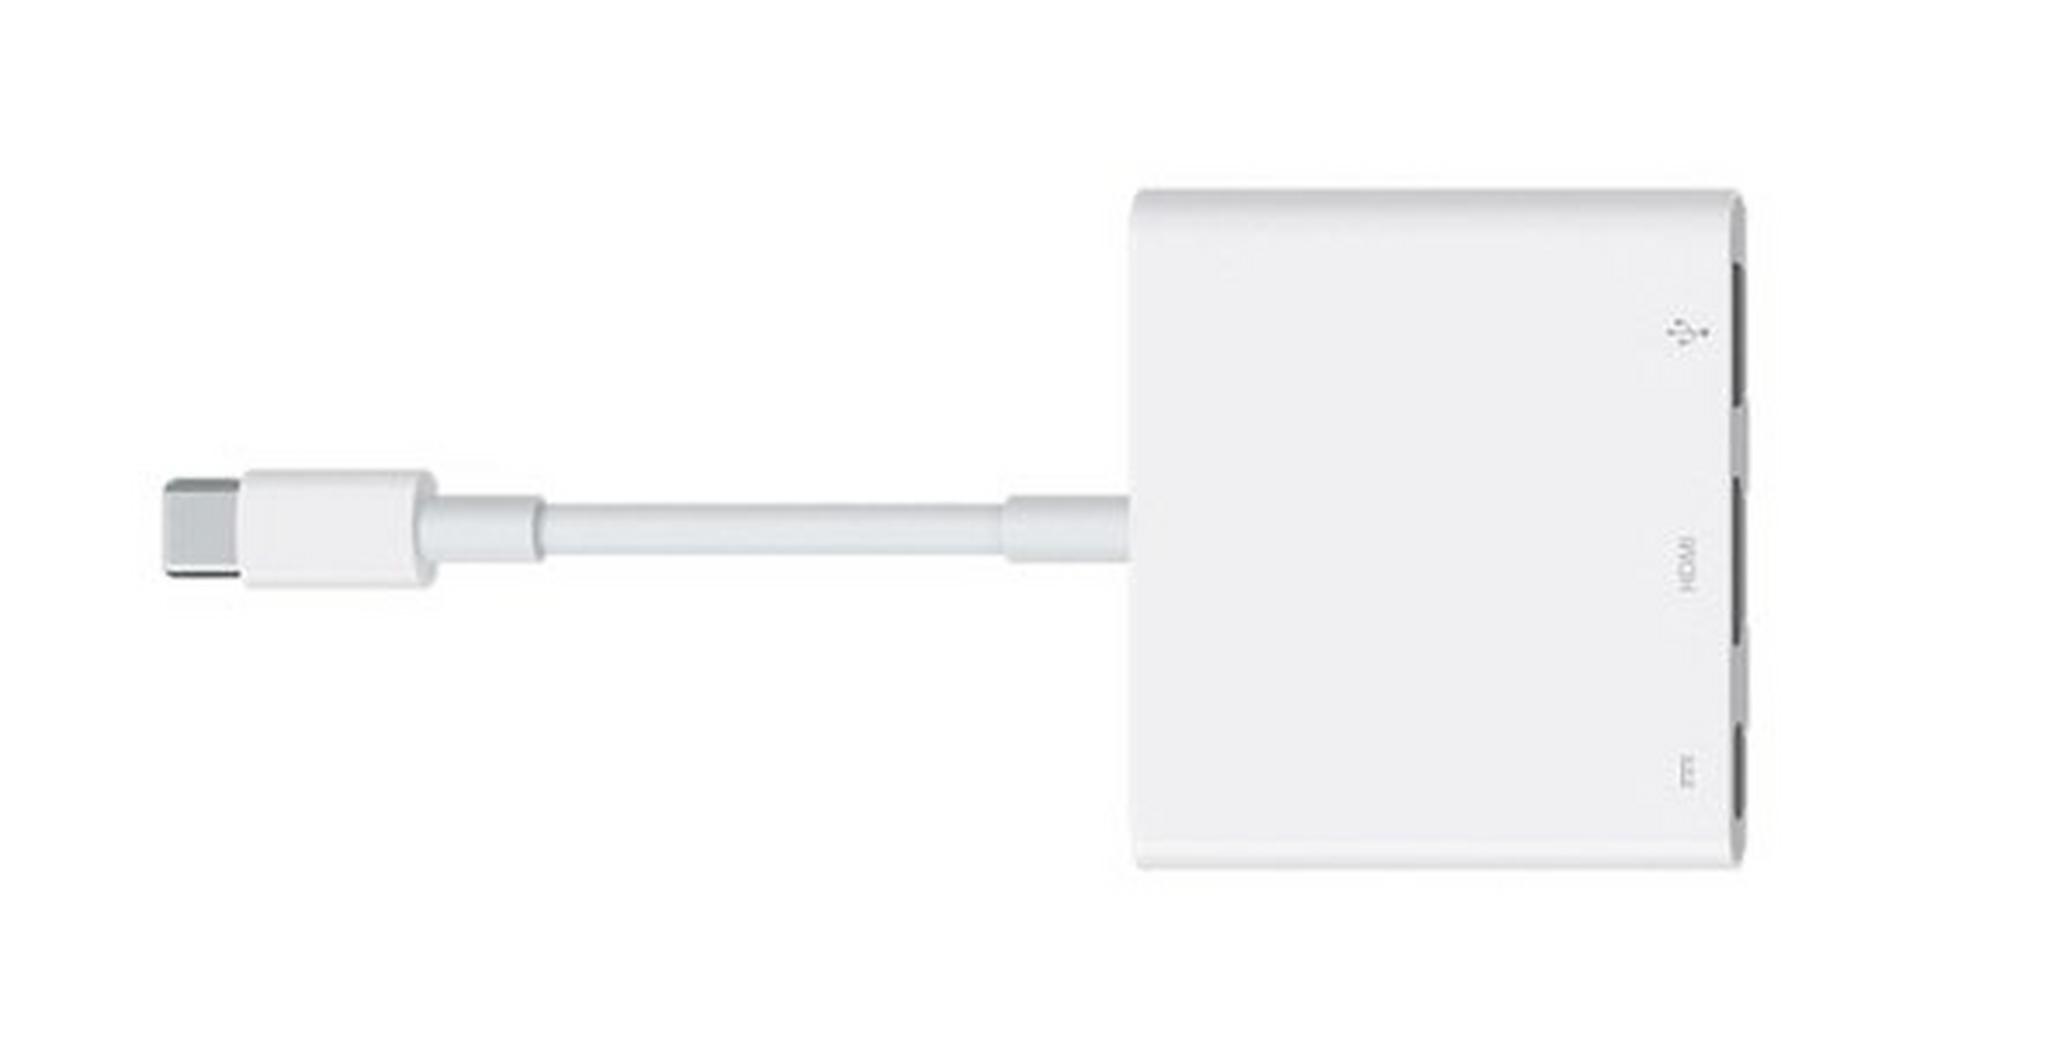 Apple USB-C VGA Multiport Adapter MJ1L2AM/A -White